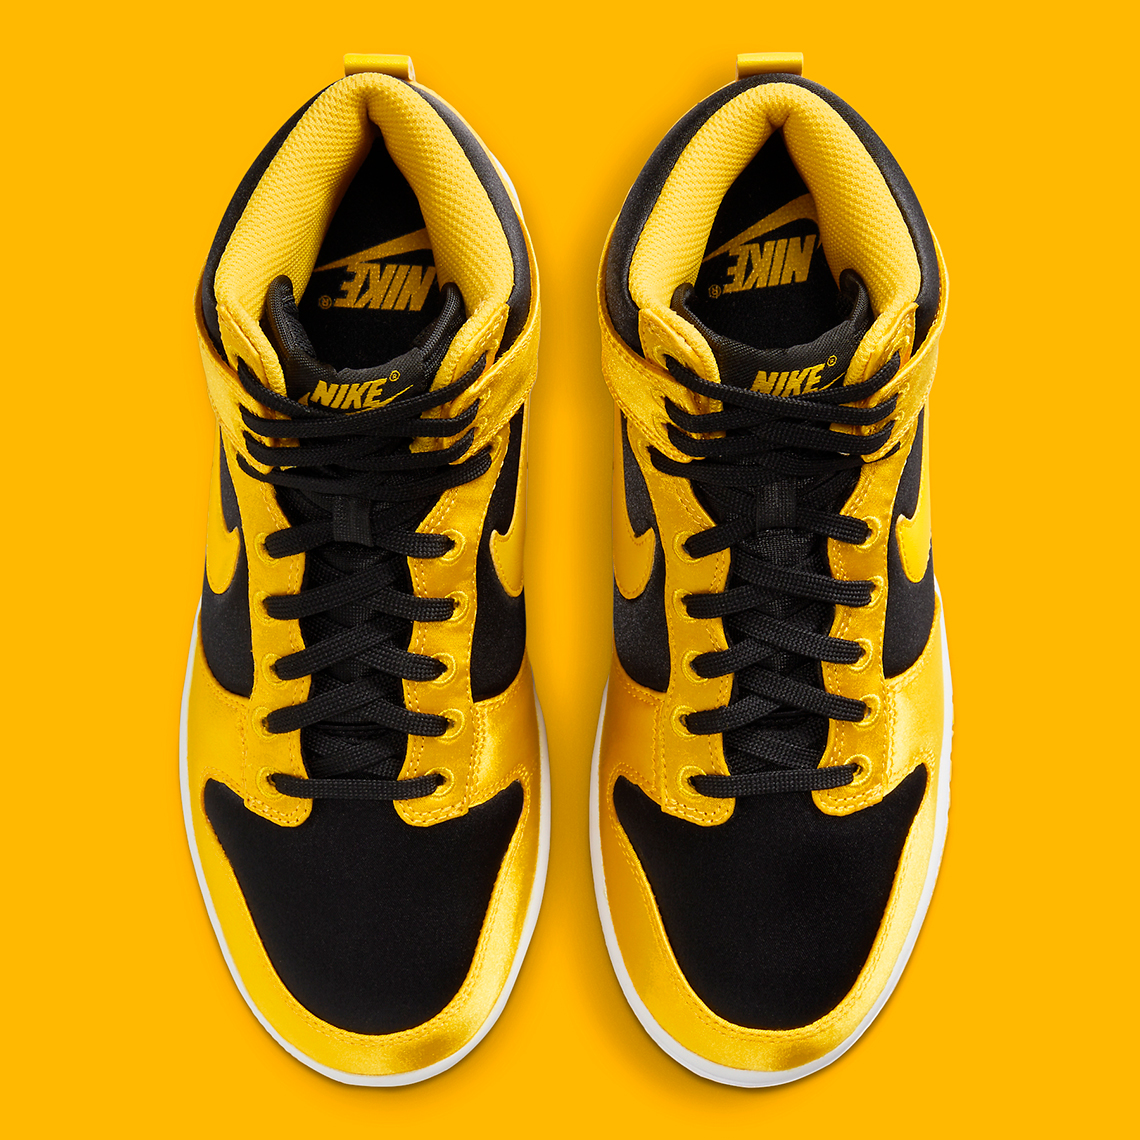 Nike Dunk High Satin Yellow Black Goldenrod Fn4216 001 3